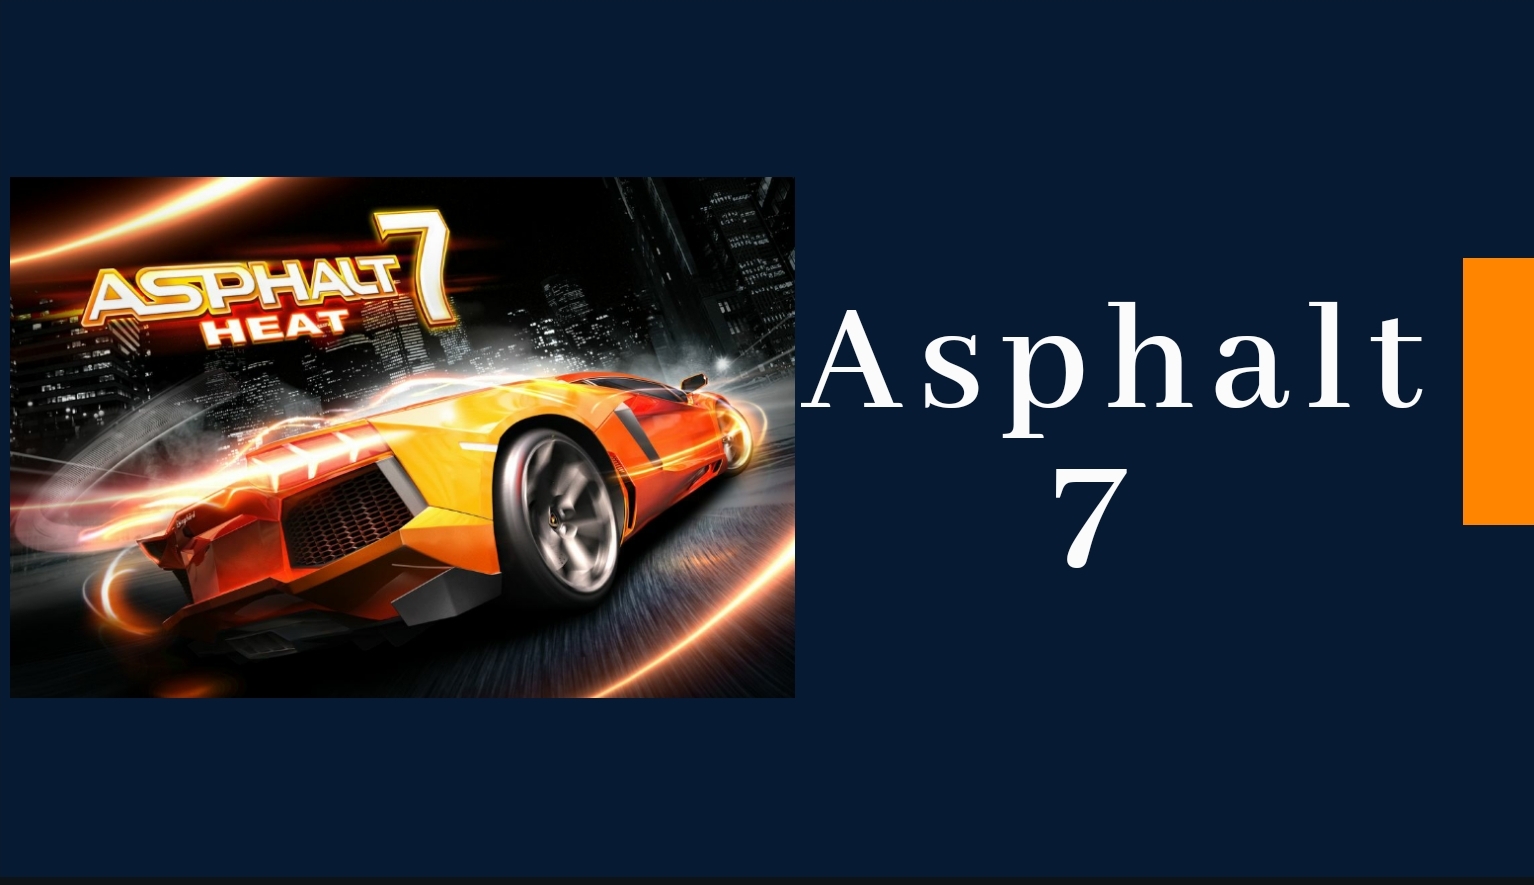 asphalt 7 heat download free